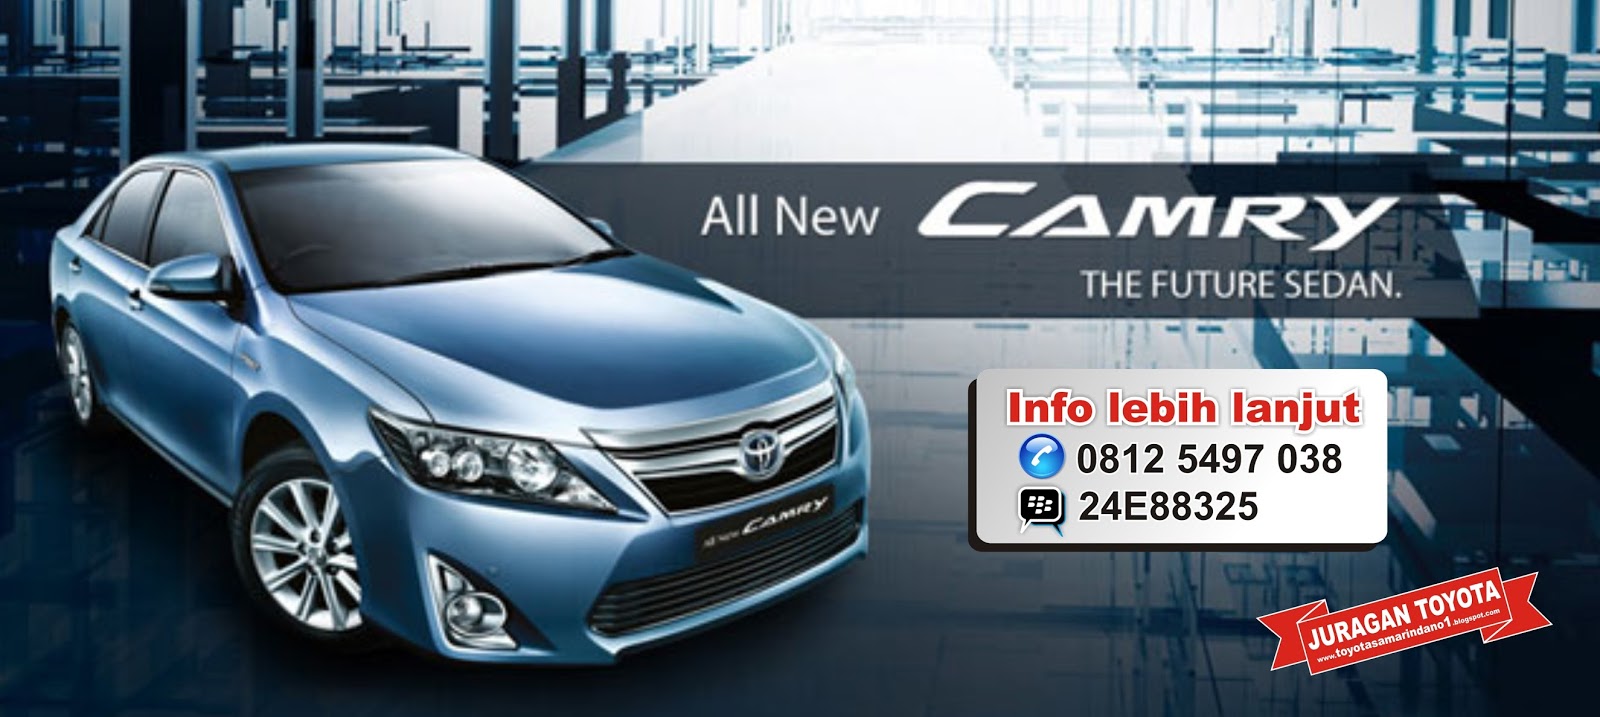 08125497038 TOYOTA Toyota All New Camry Harga Toyota Camry Jual